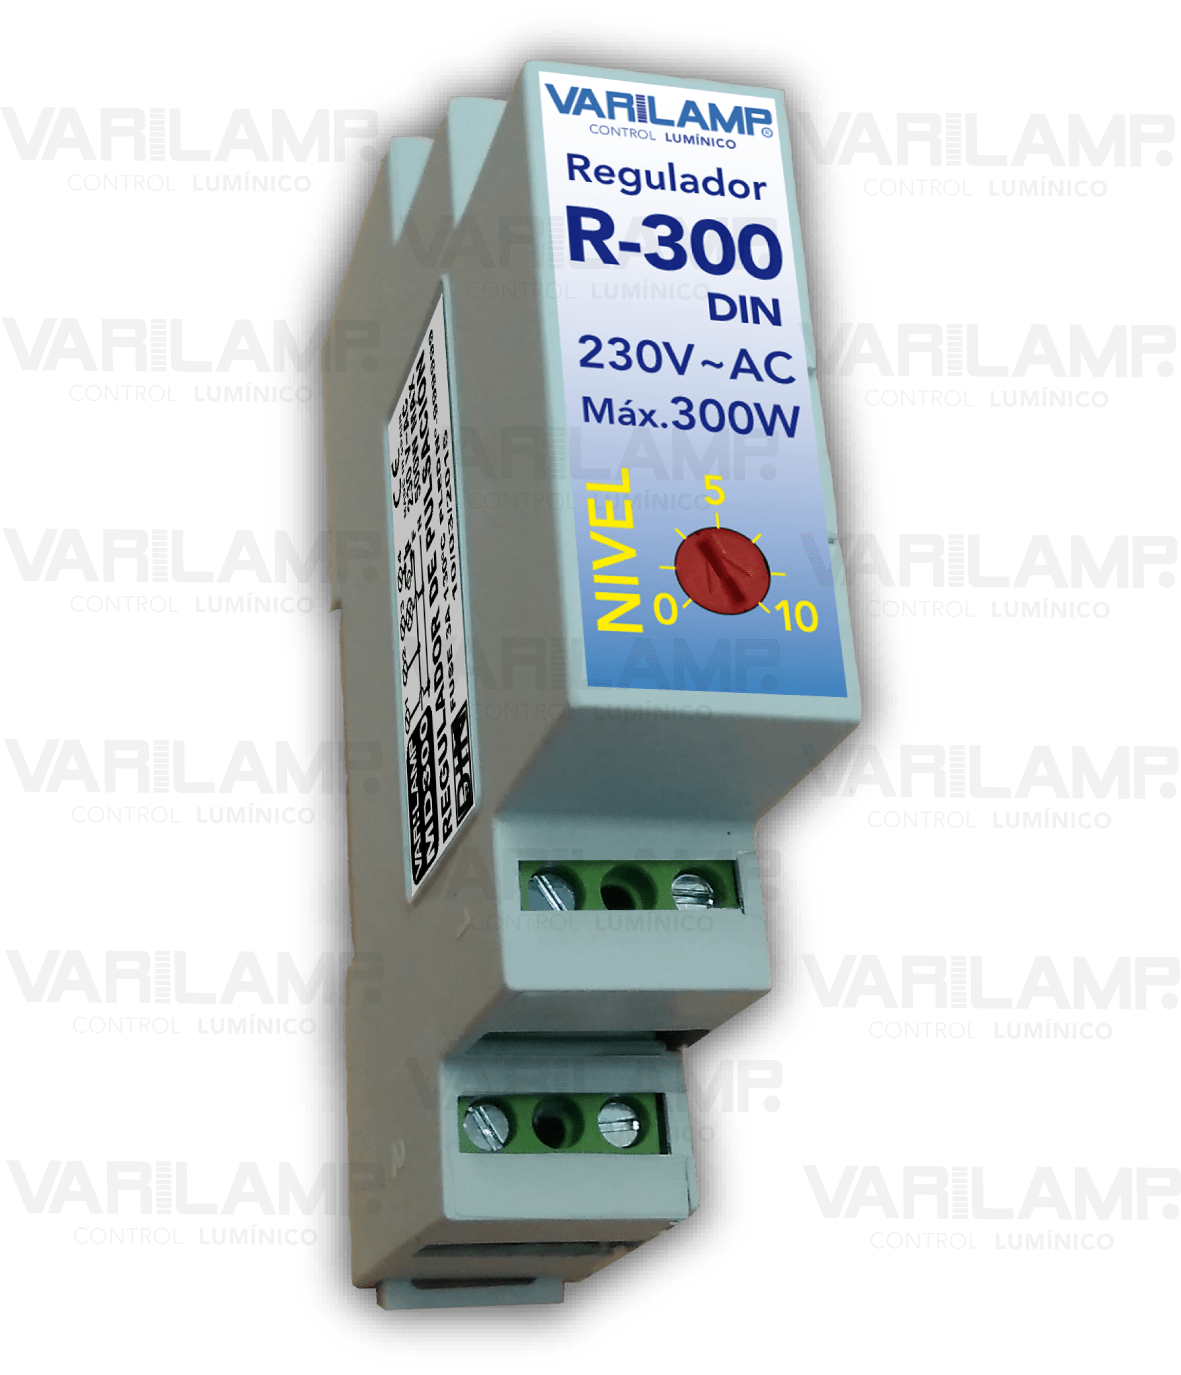 R-300 DIN Varilamp. Regulador UNIVERSAL a potenciómetro en carril DIN para cualquier LED regulable